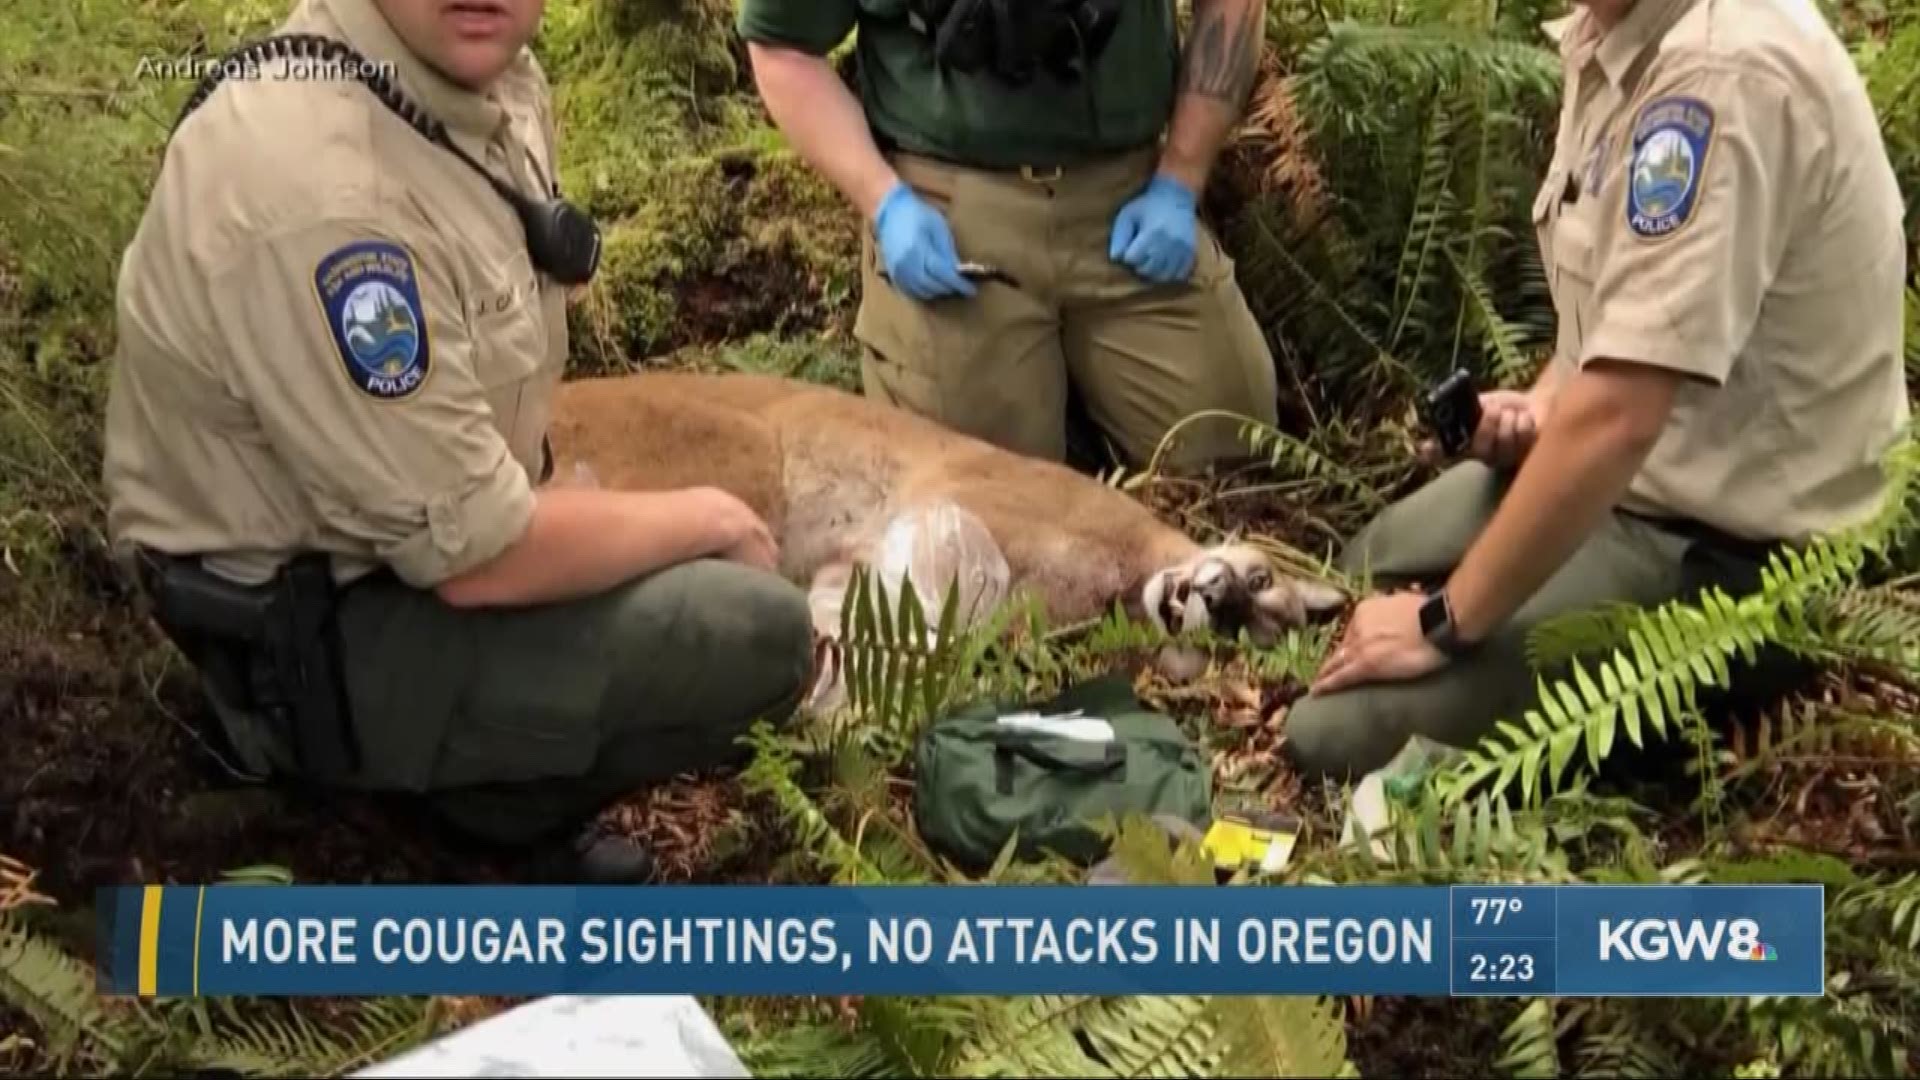 More cougar sightings, no attacks in Oregon